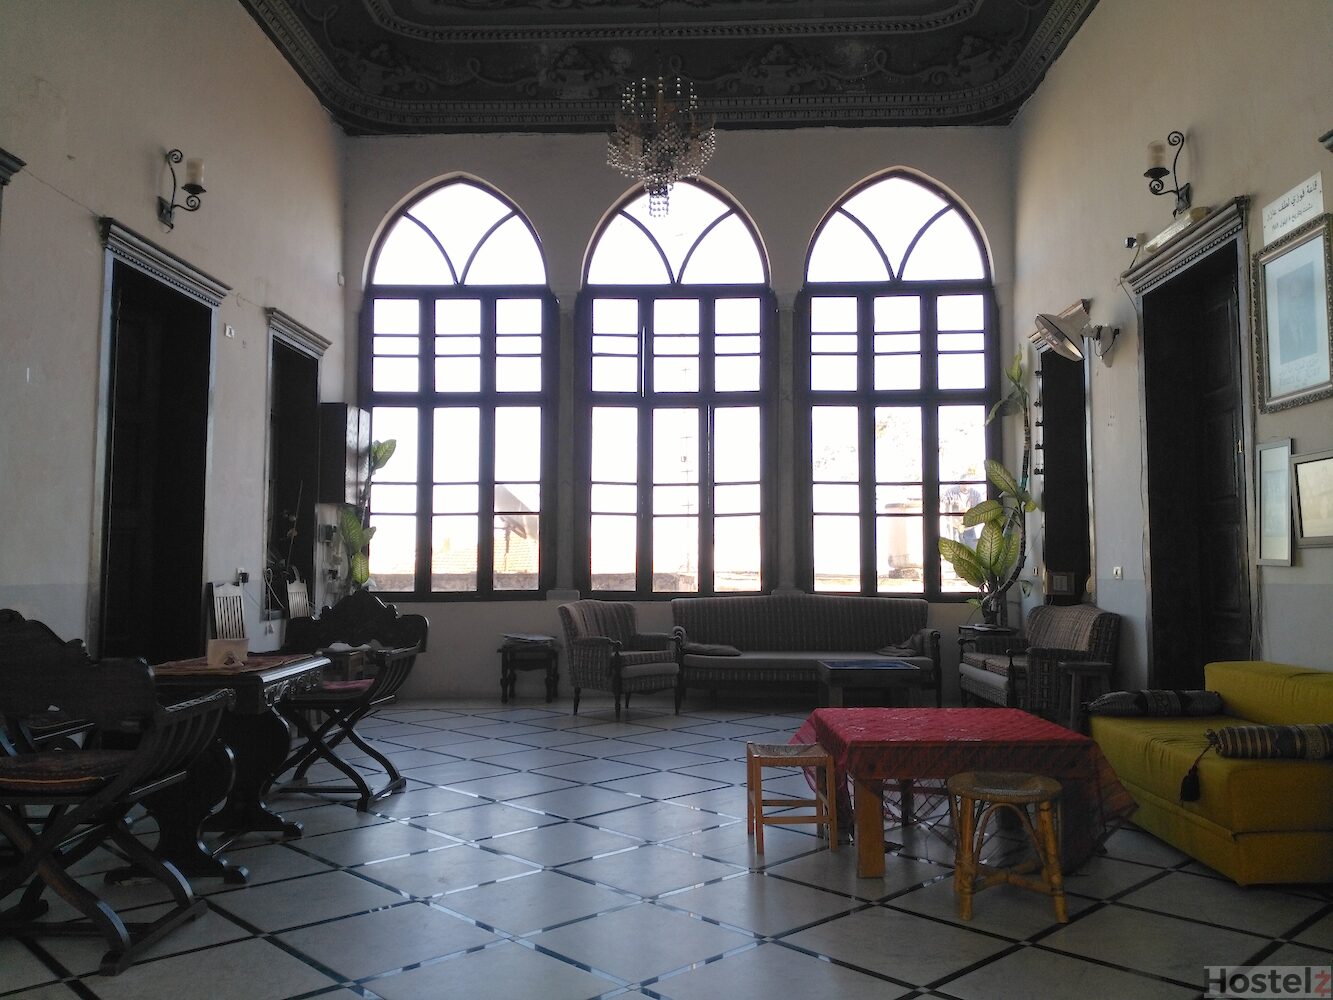 Second floor lounge